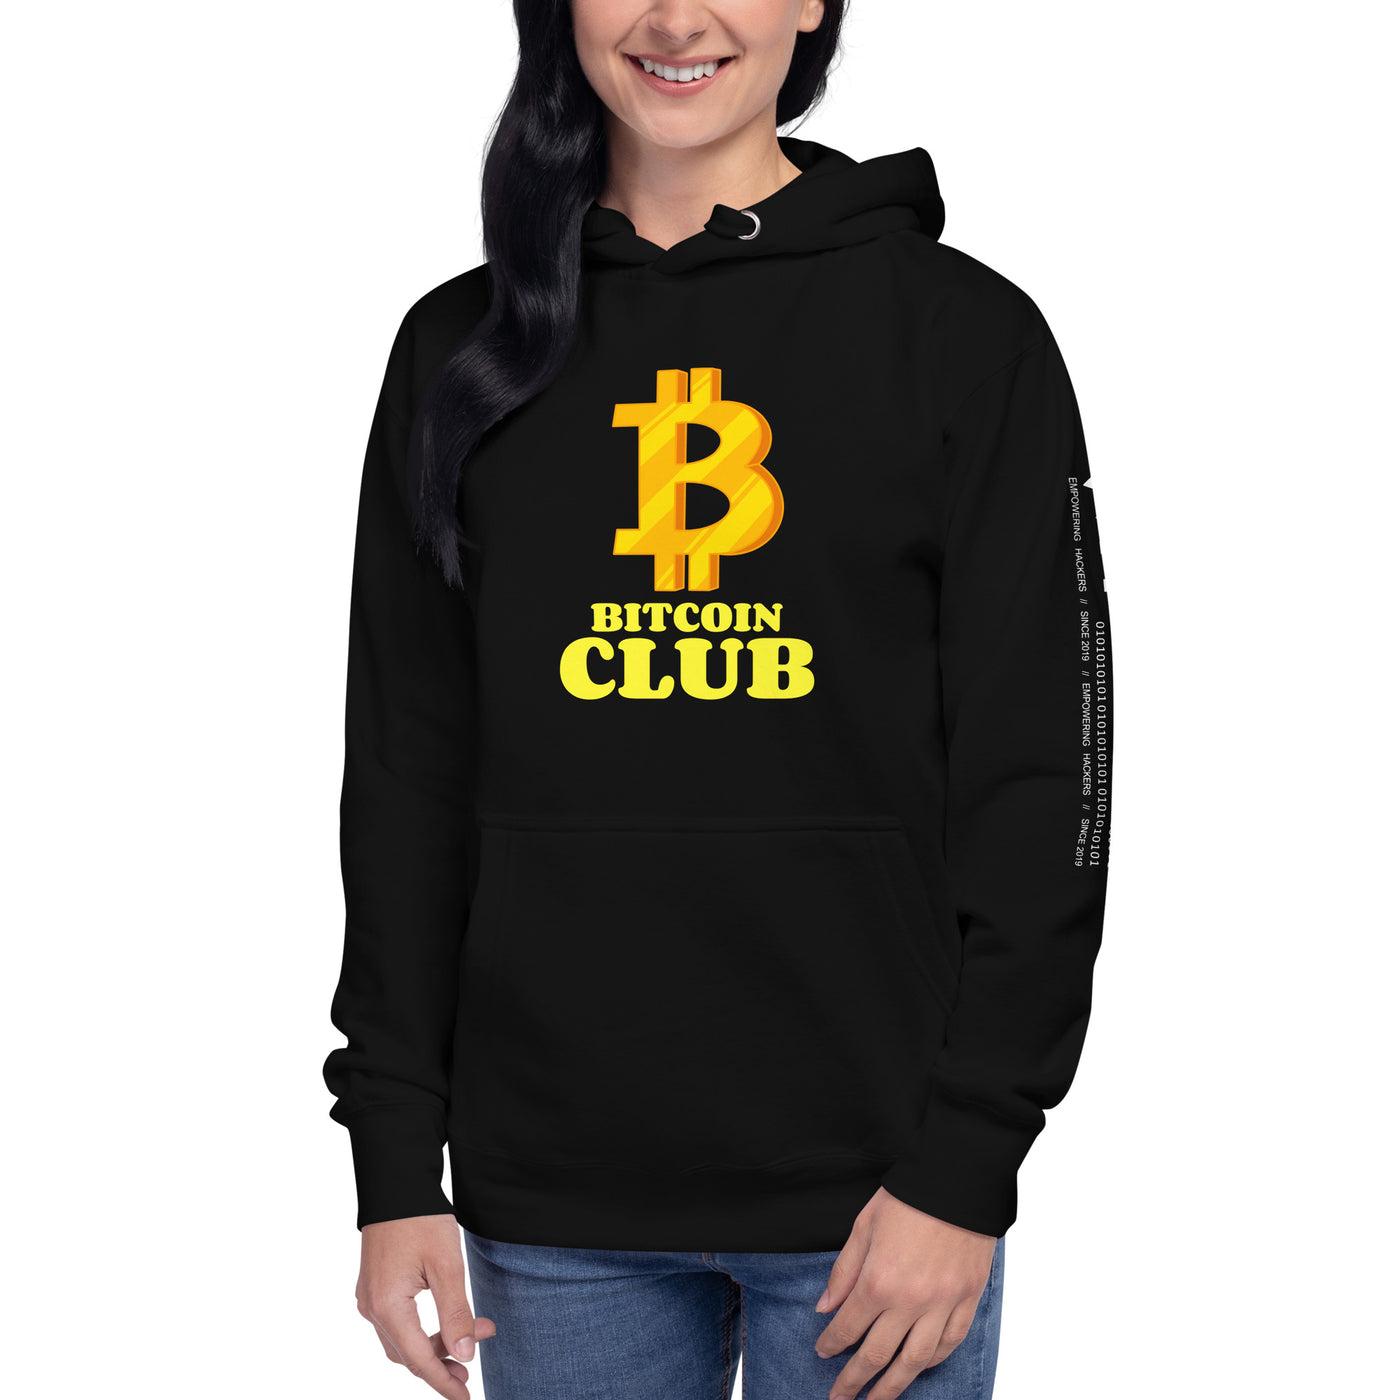 BITCOIN CLUB V5 - Unisex Hoodie